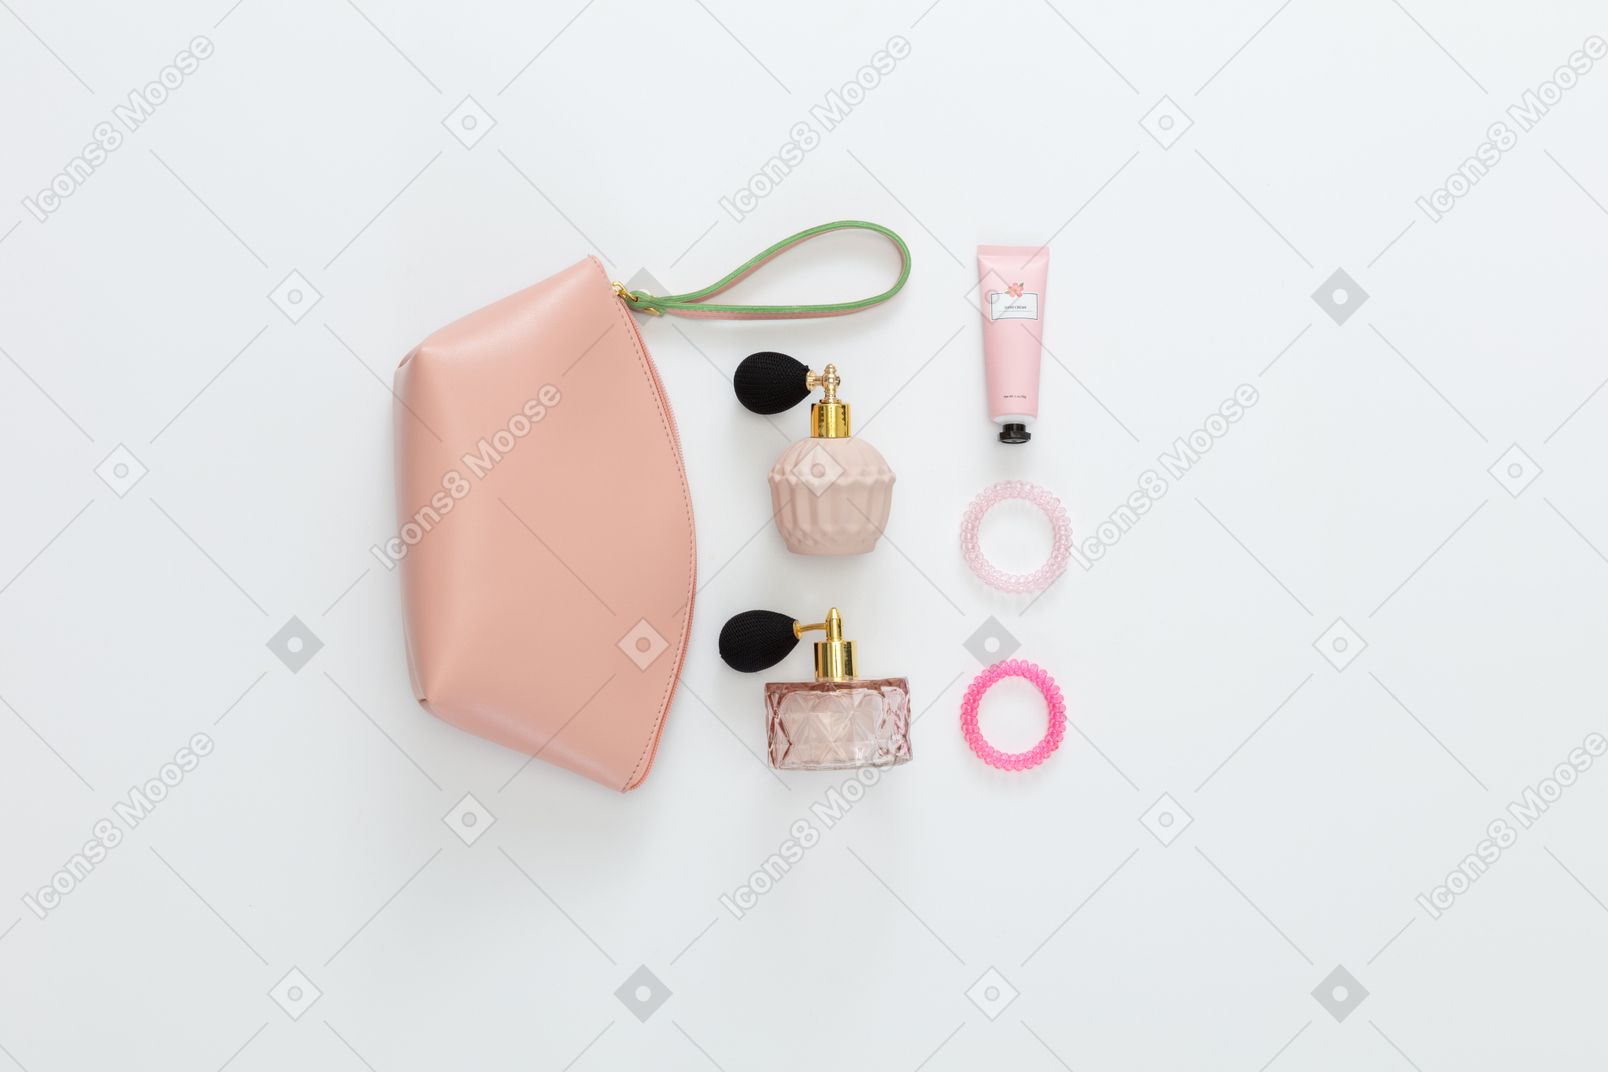 Female accessories